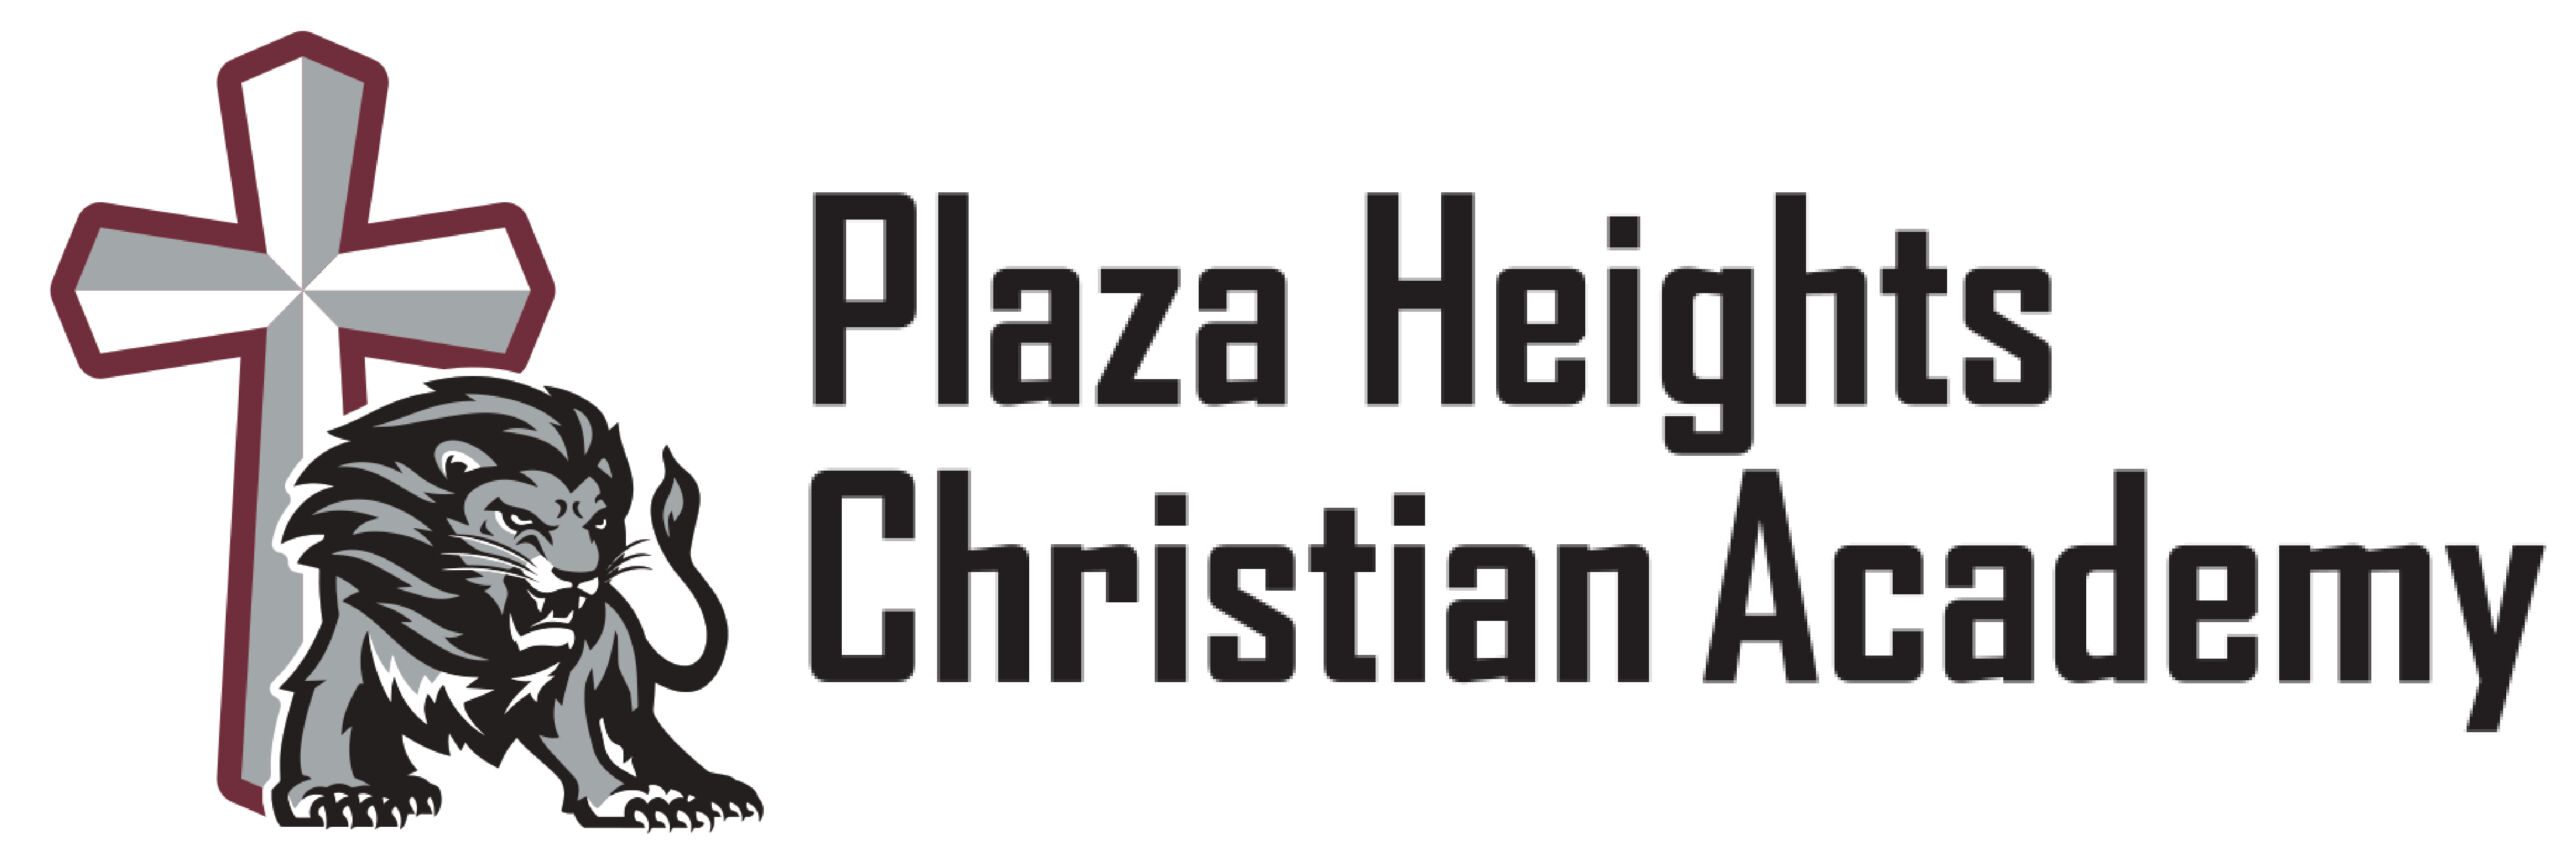 Plaza Heights Christian Academy Logo